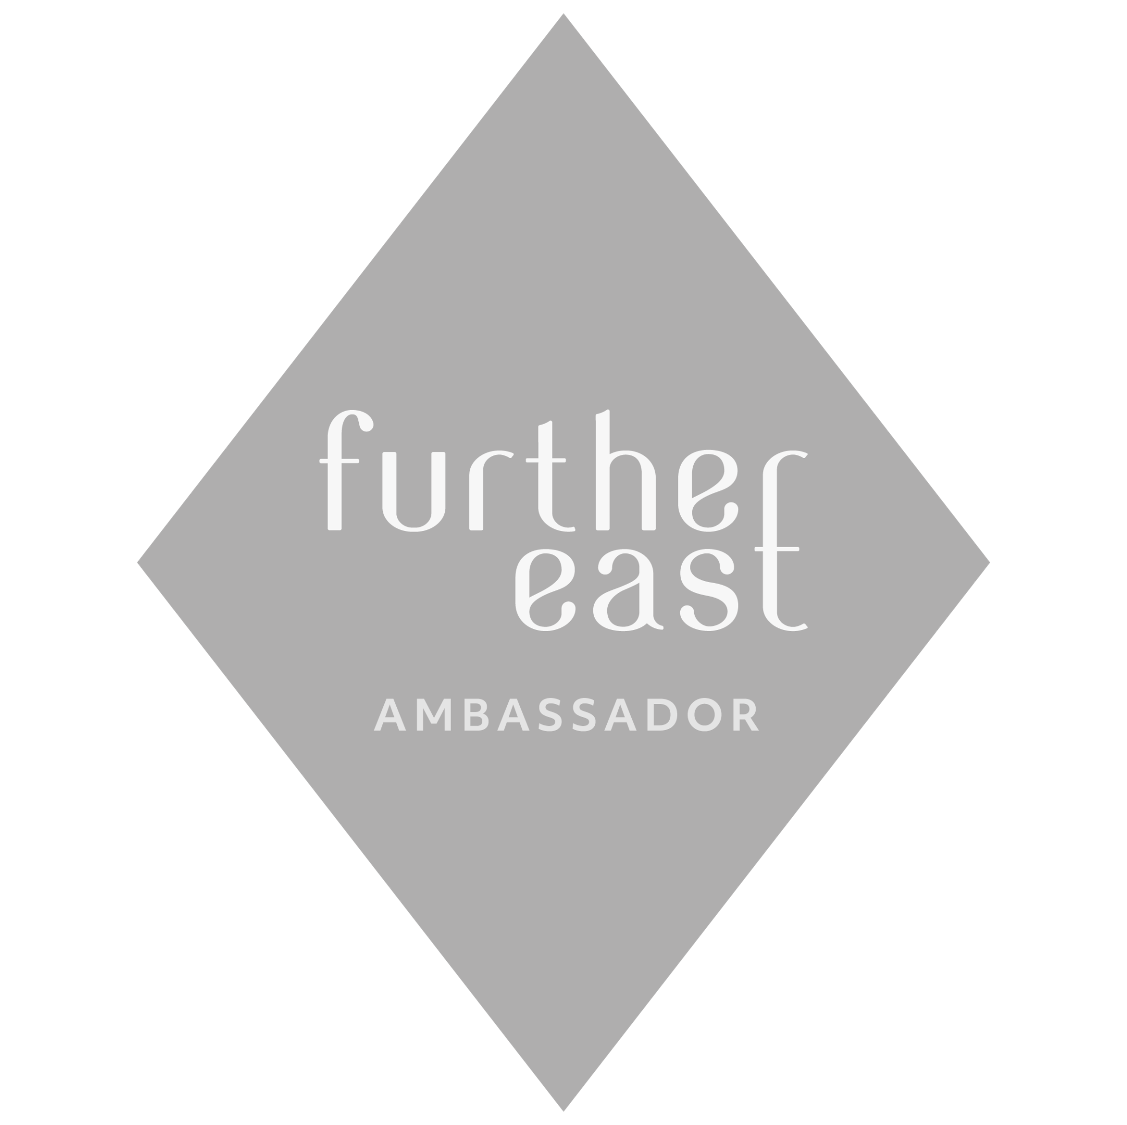 Southern Crossings Further East Ambassador logo